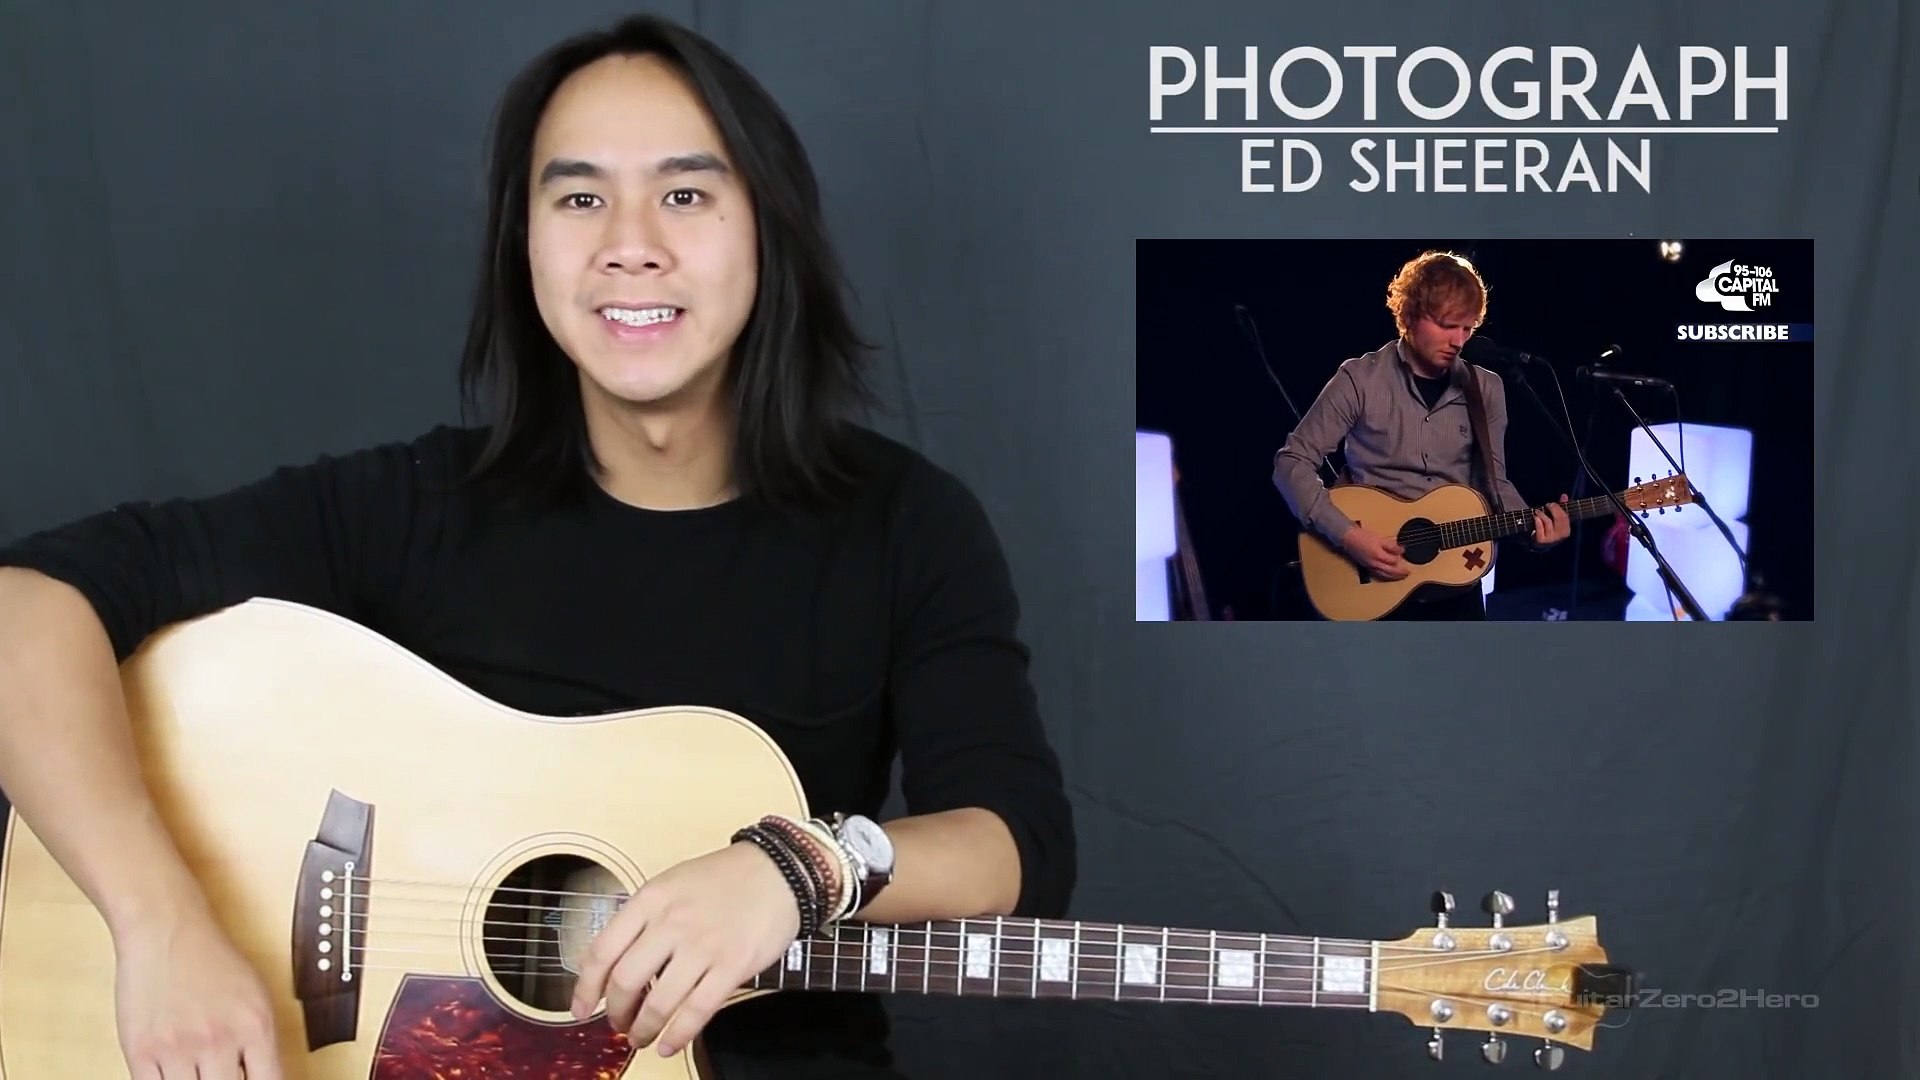 Photograph - Ed Sheeran: Guitar chords